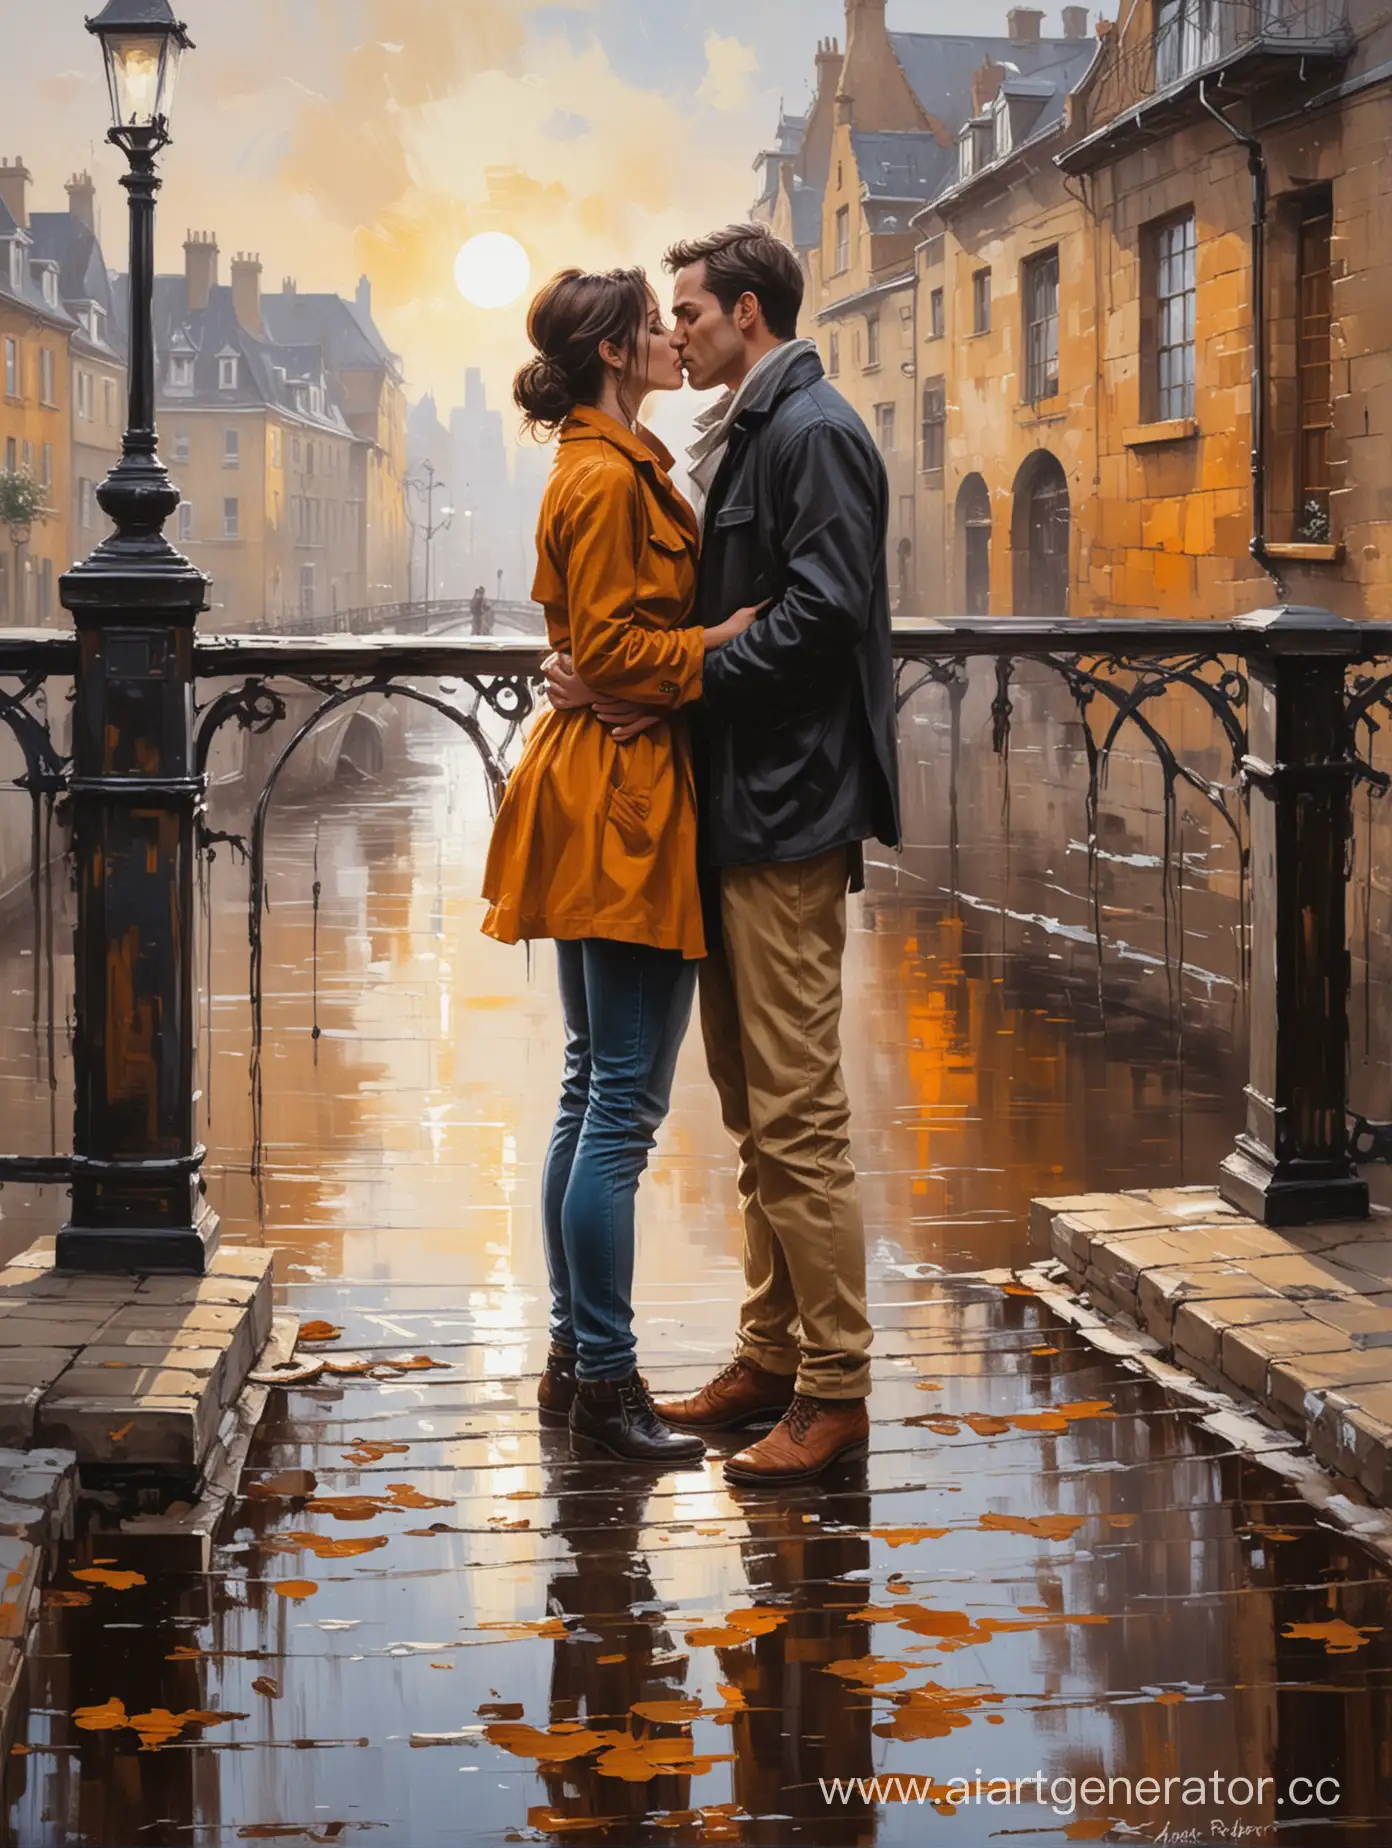 Romantic-Urban-Street-Art-Kissing-Lovers-on-the-Bridge-Acrylic-Painting